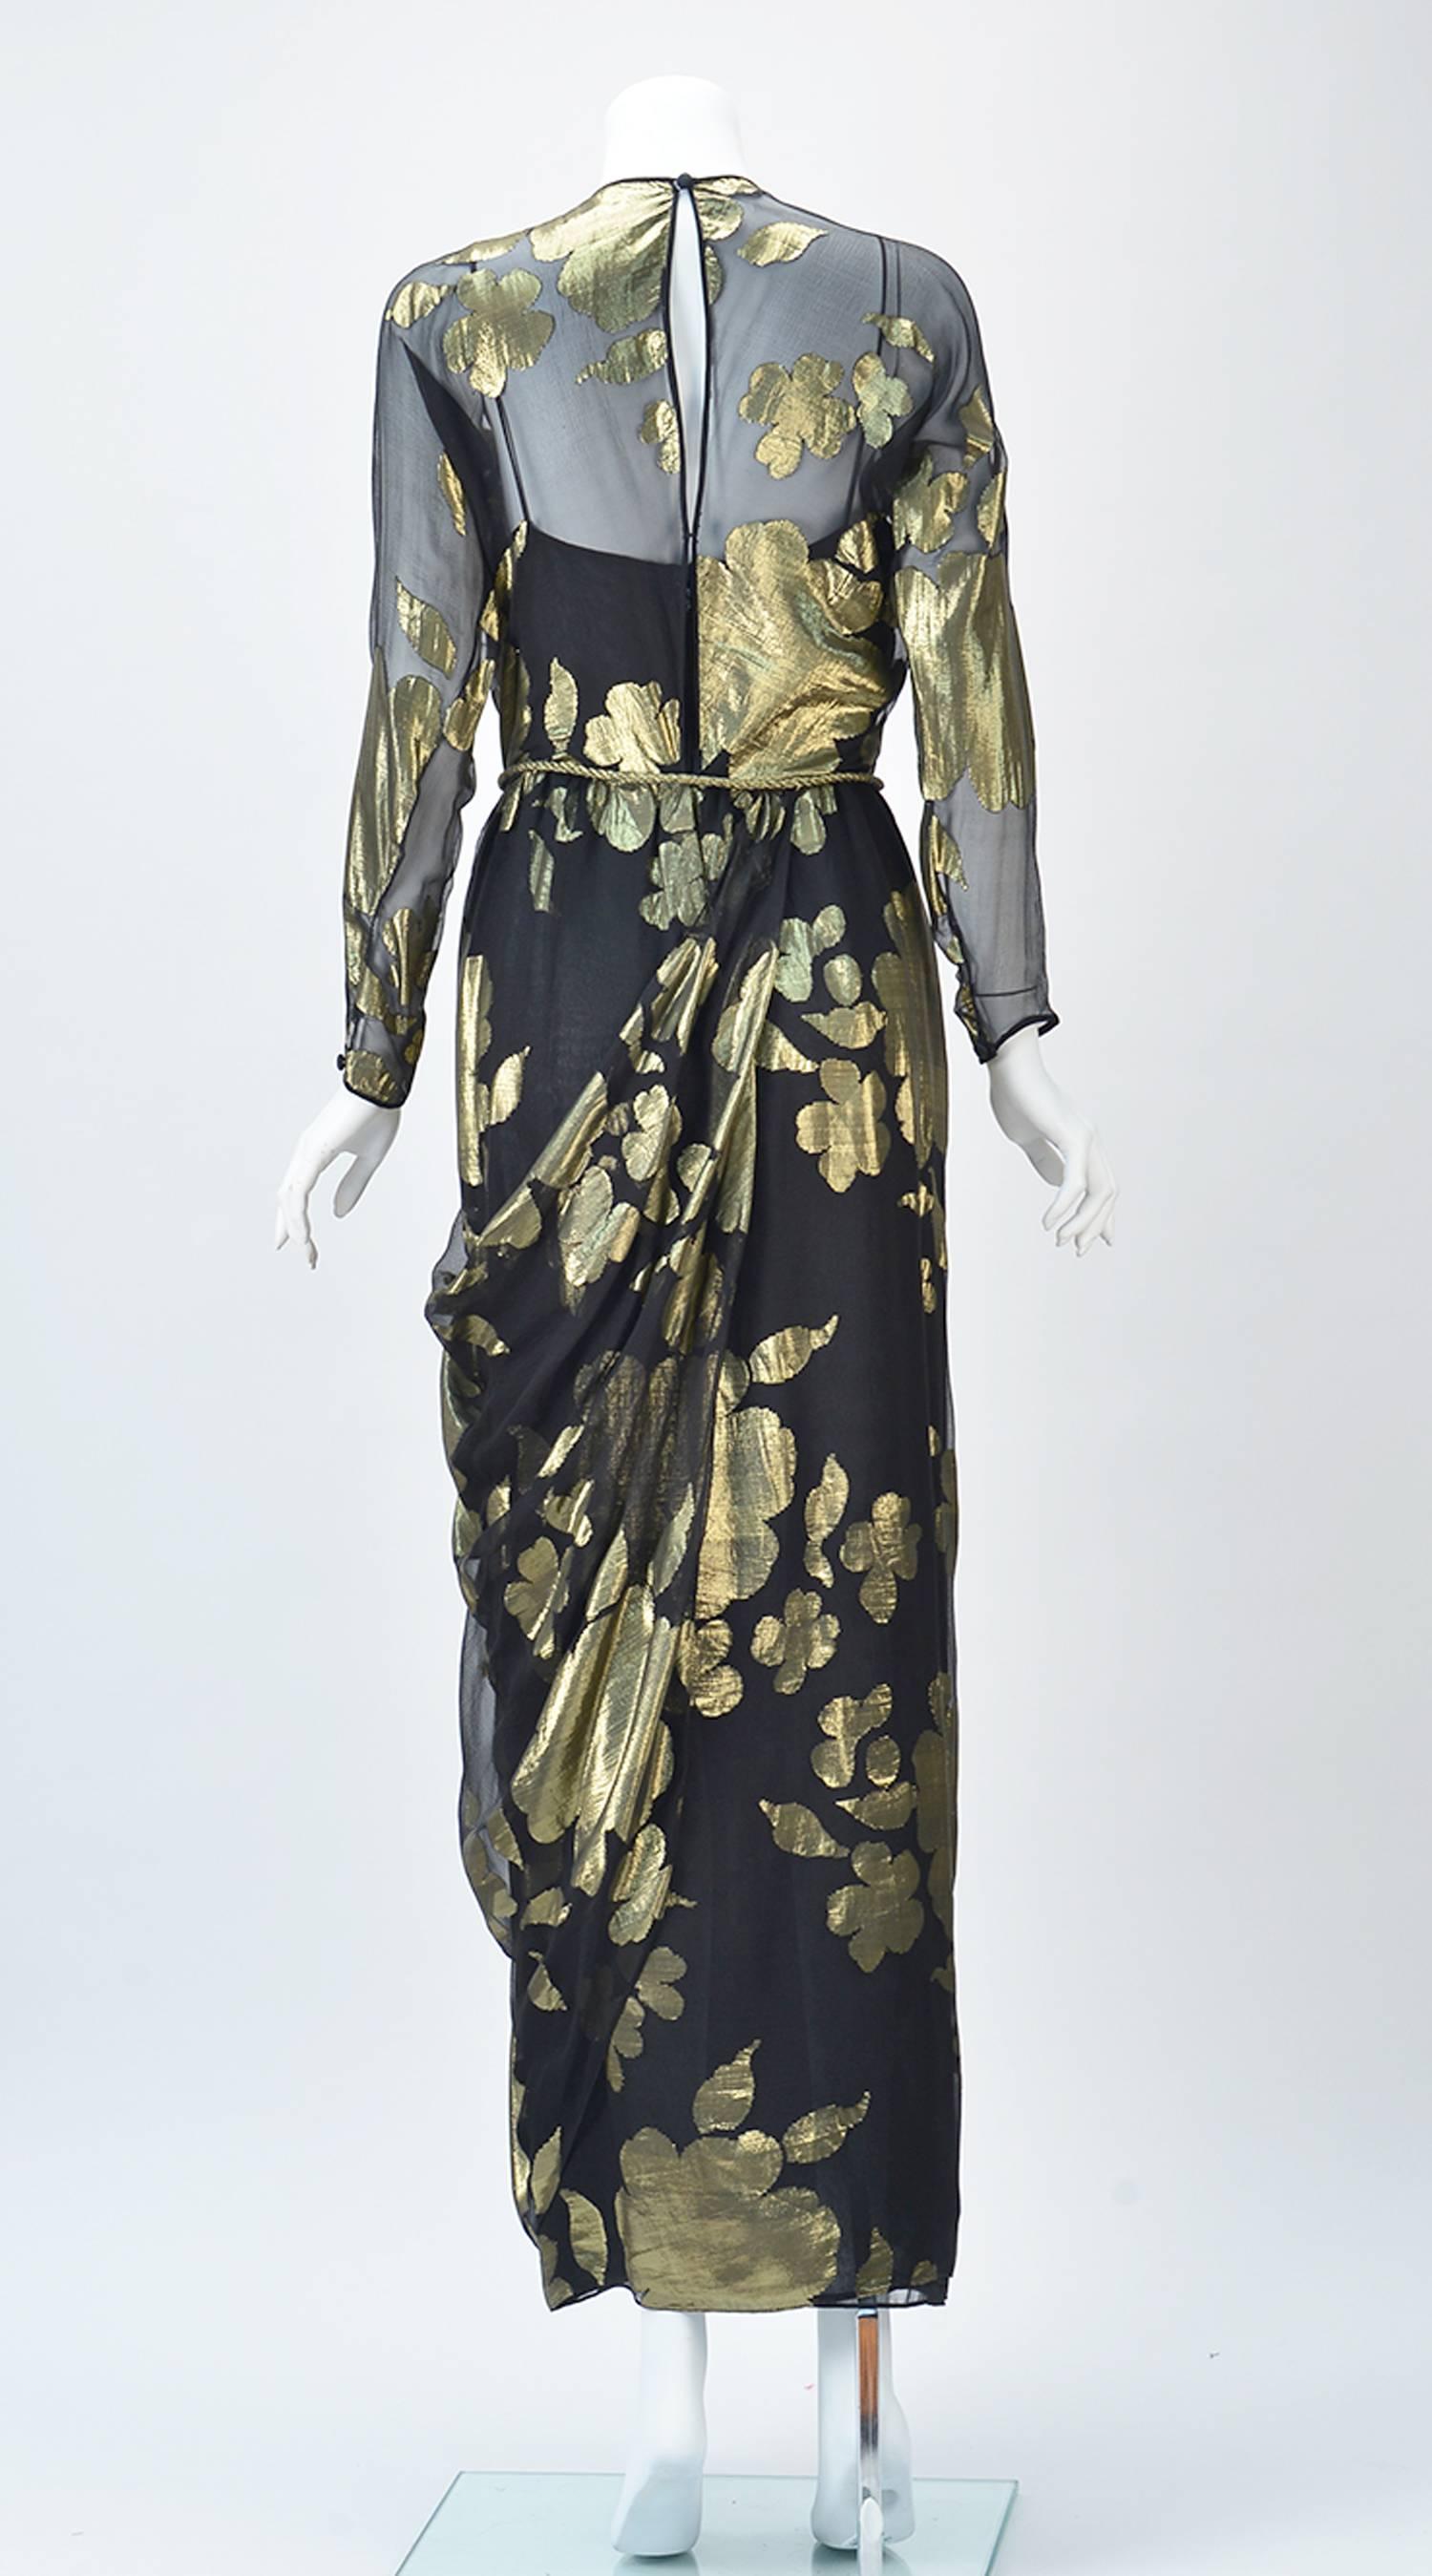 Women's 1970s Oscar de la Renta Abstract Floral Metallic Dress Ensemble